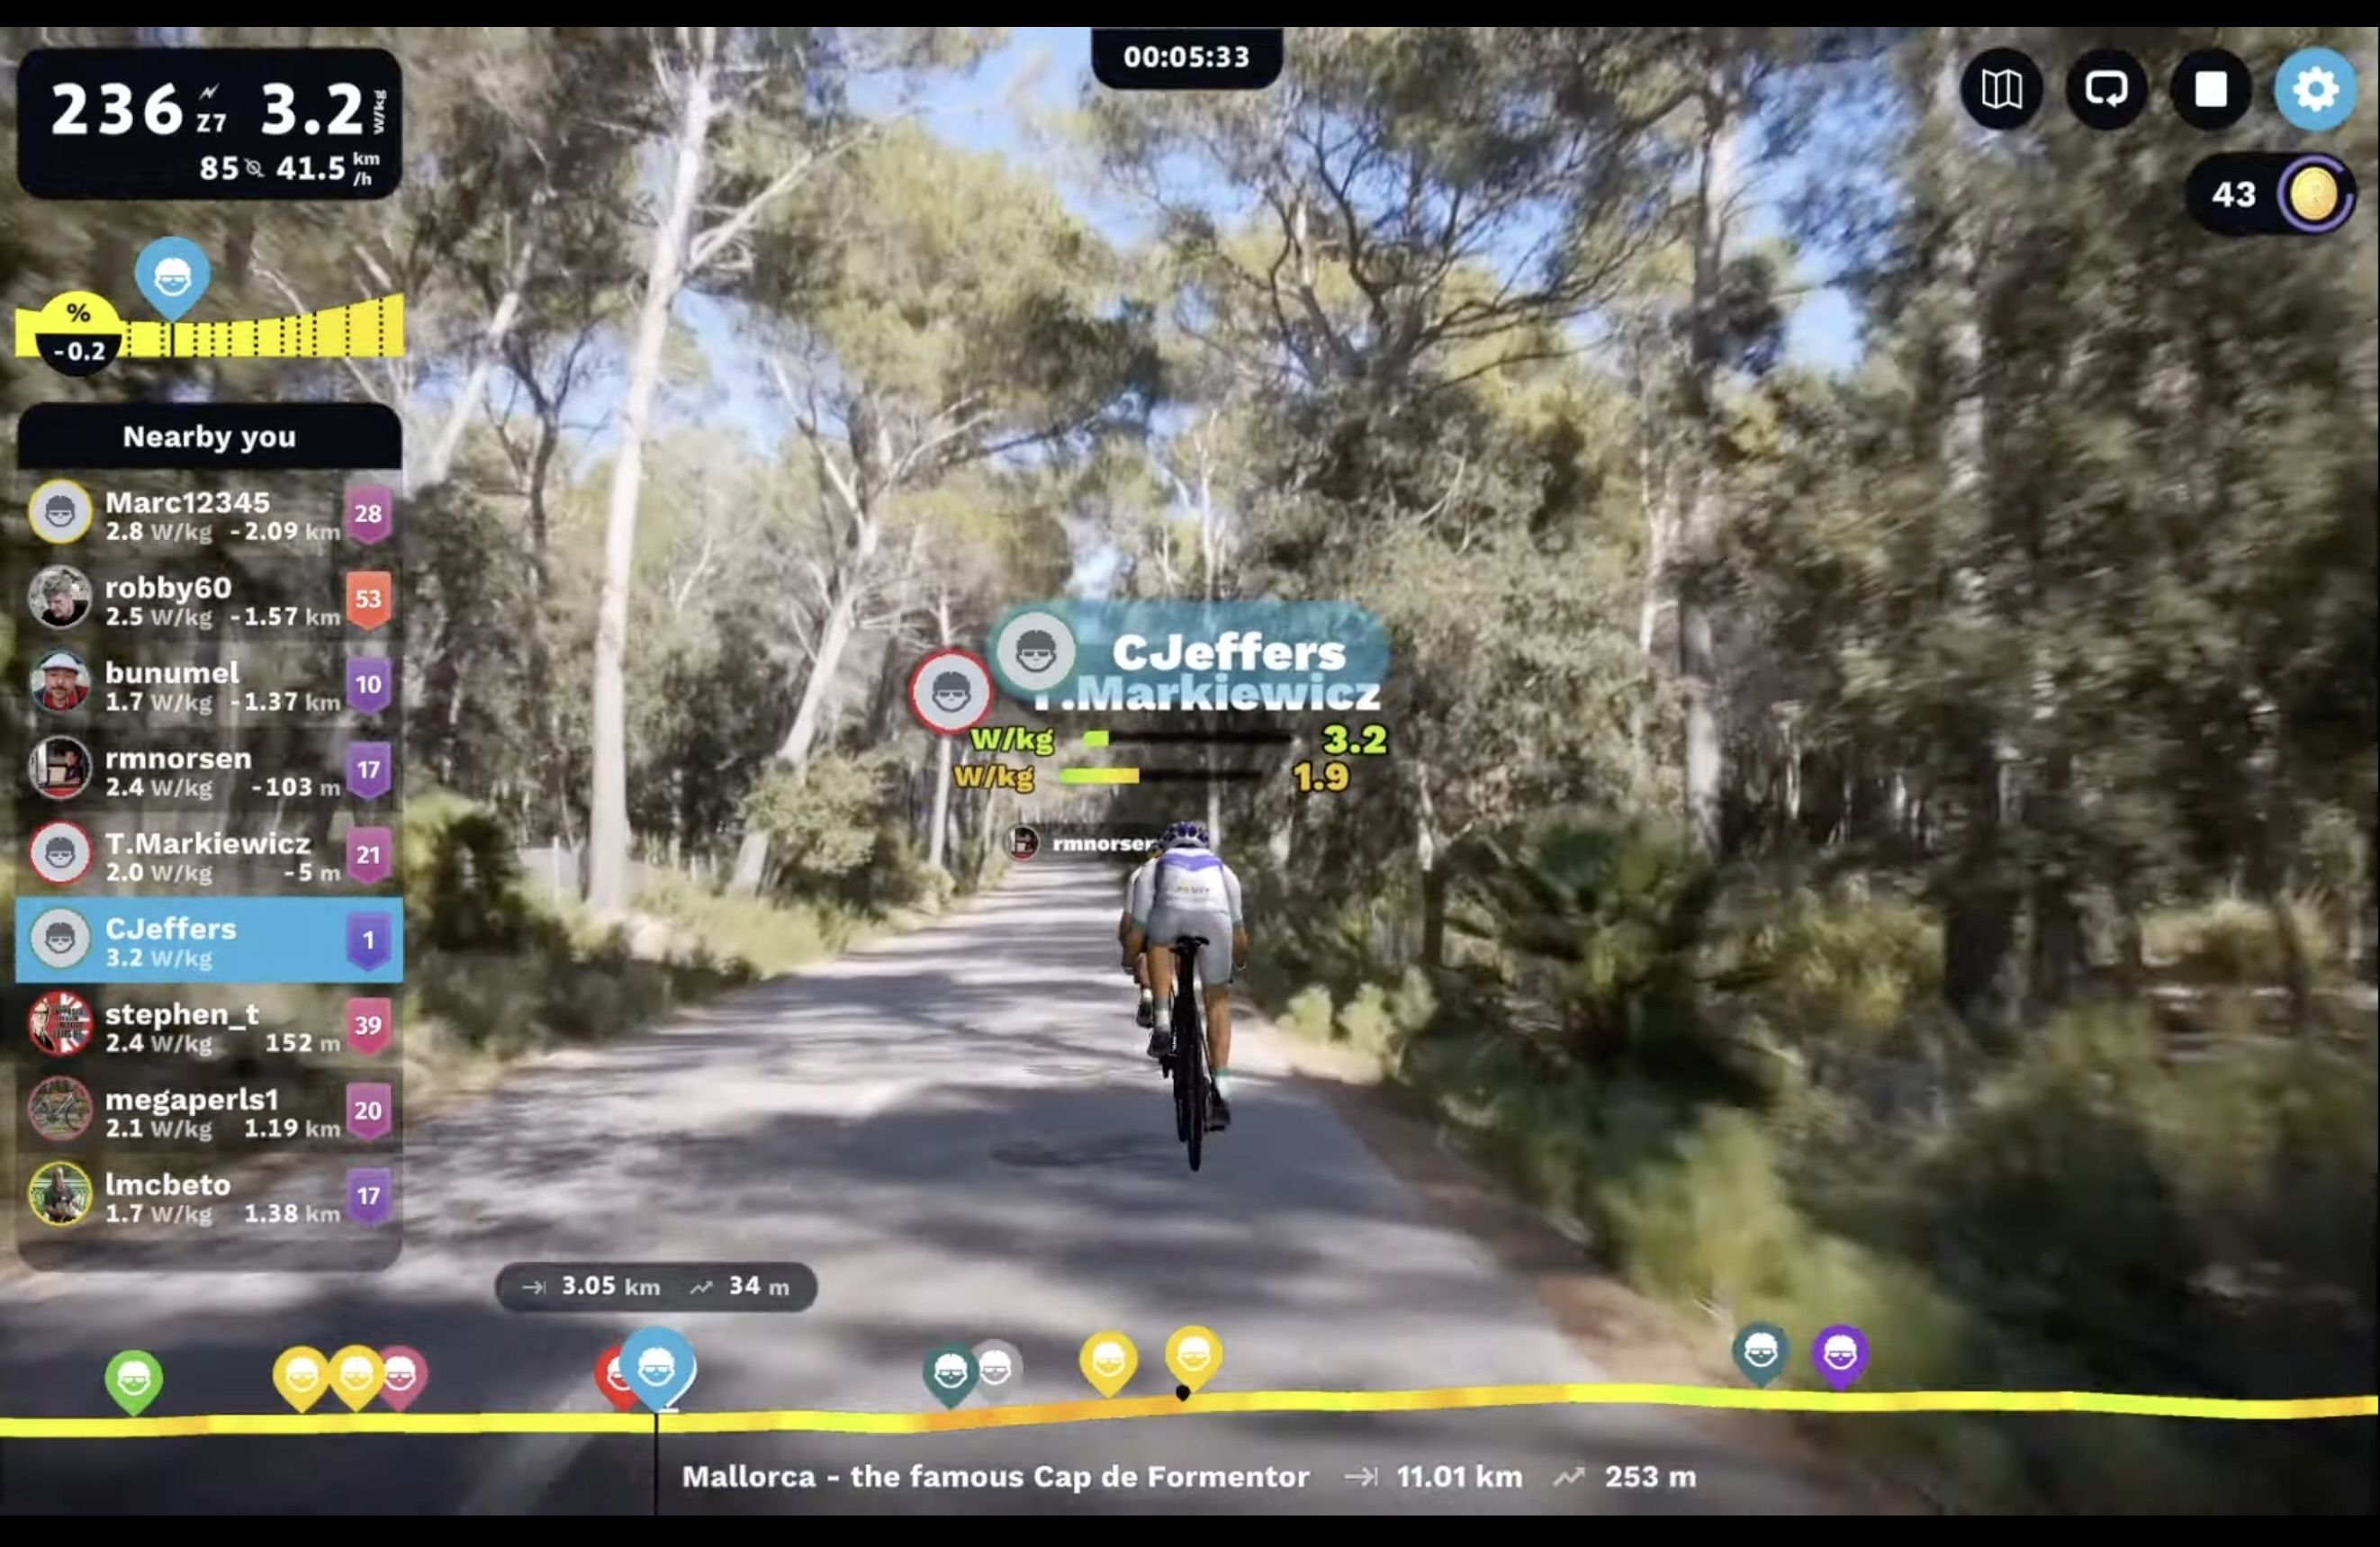 Cameron Jeffers rouvy avatar riding in the famous Cap de Romentor